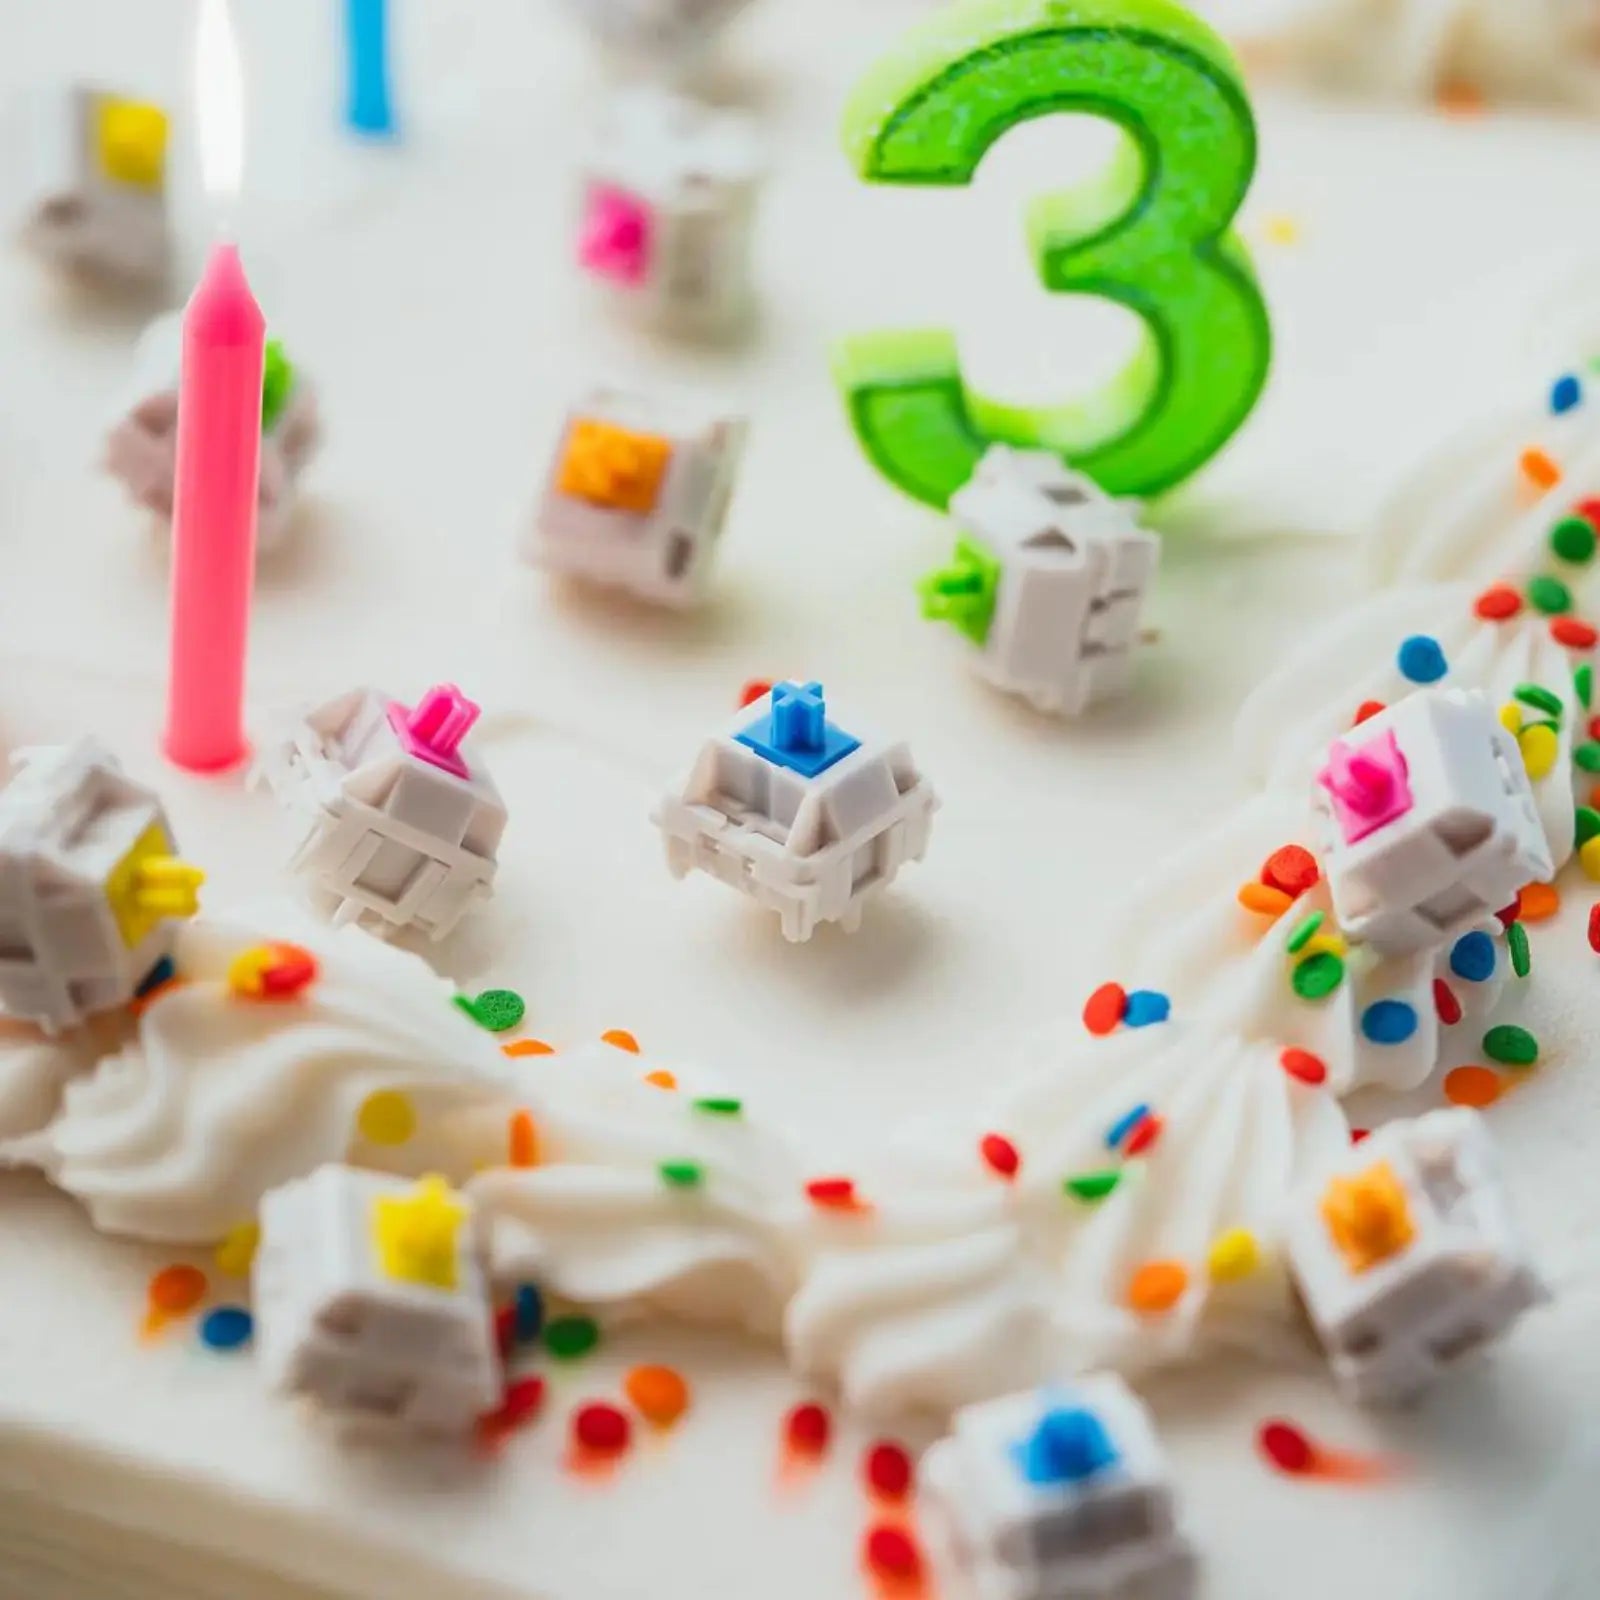 DK Creamery - Birthday Cake Switches